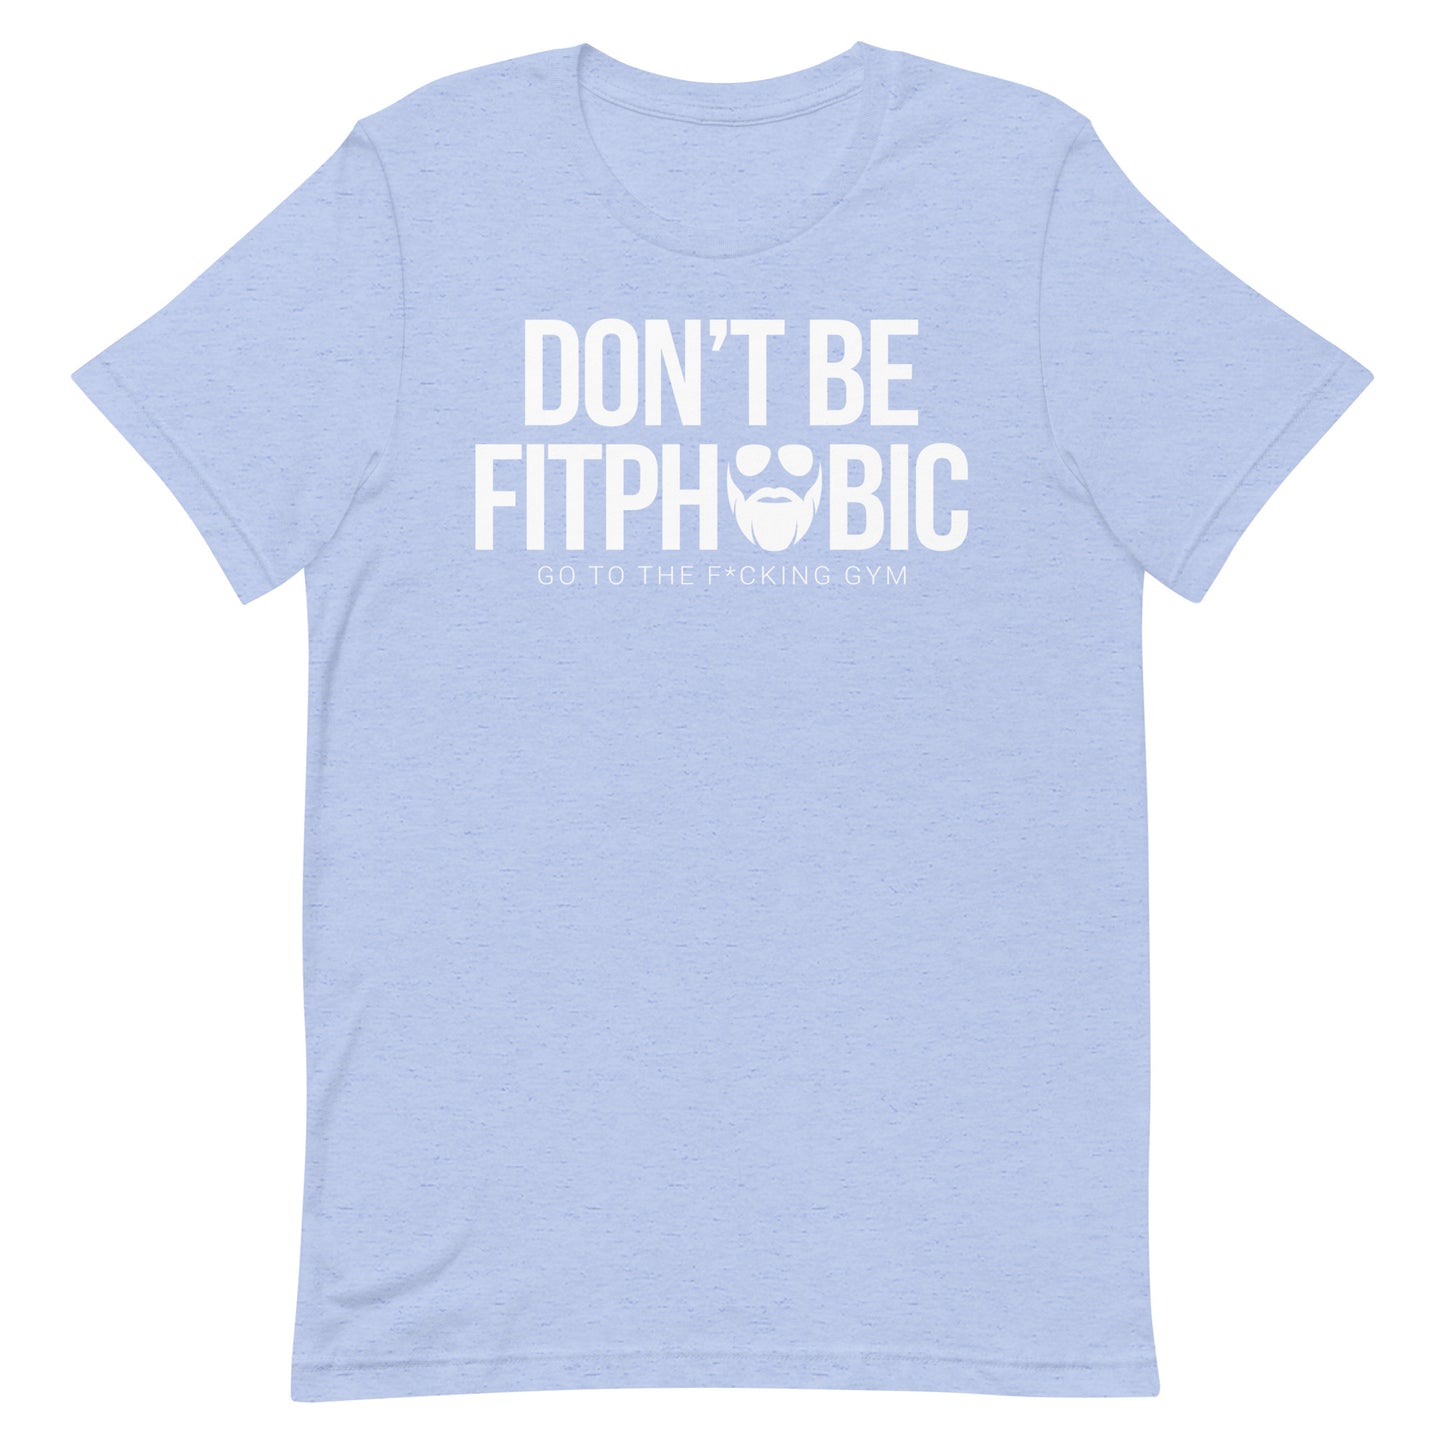 Don't Be Fitphobic T-Shirt